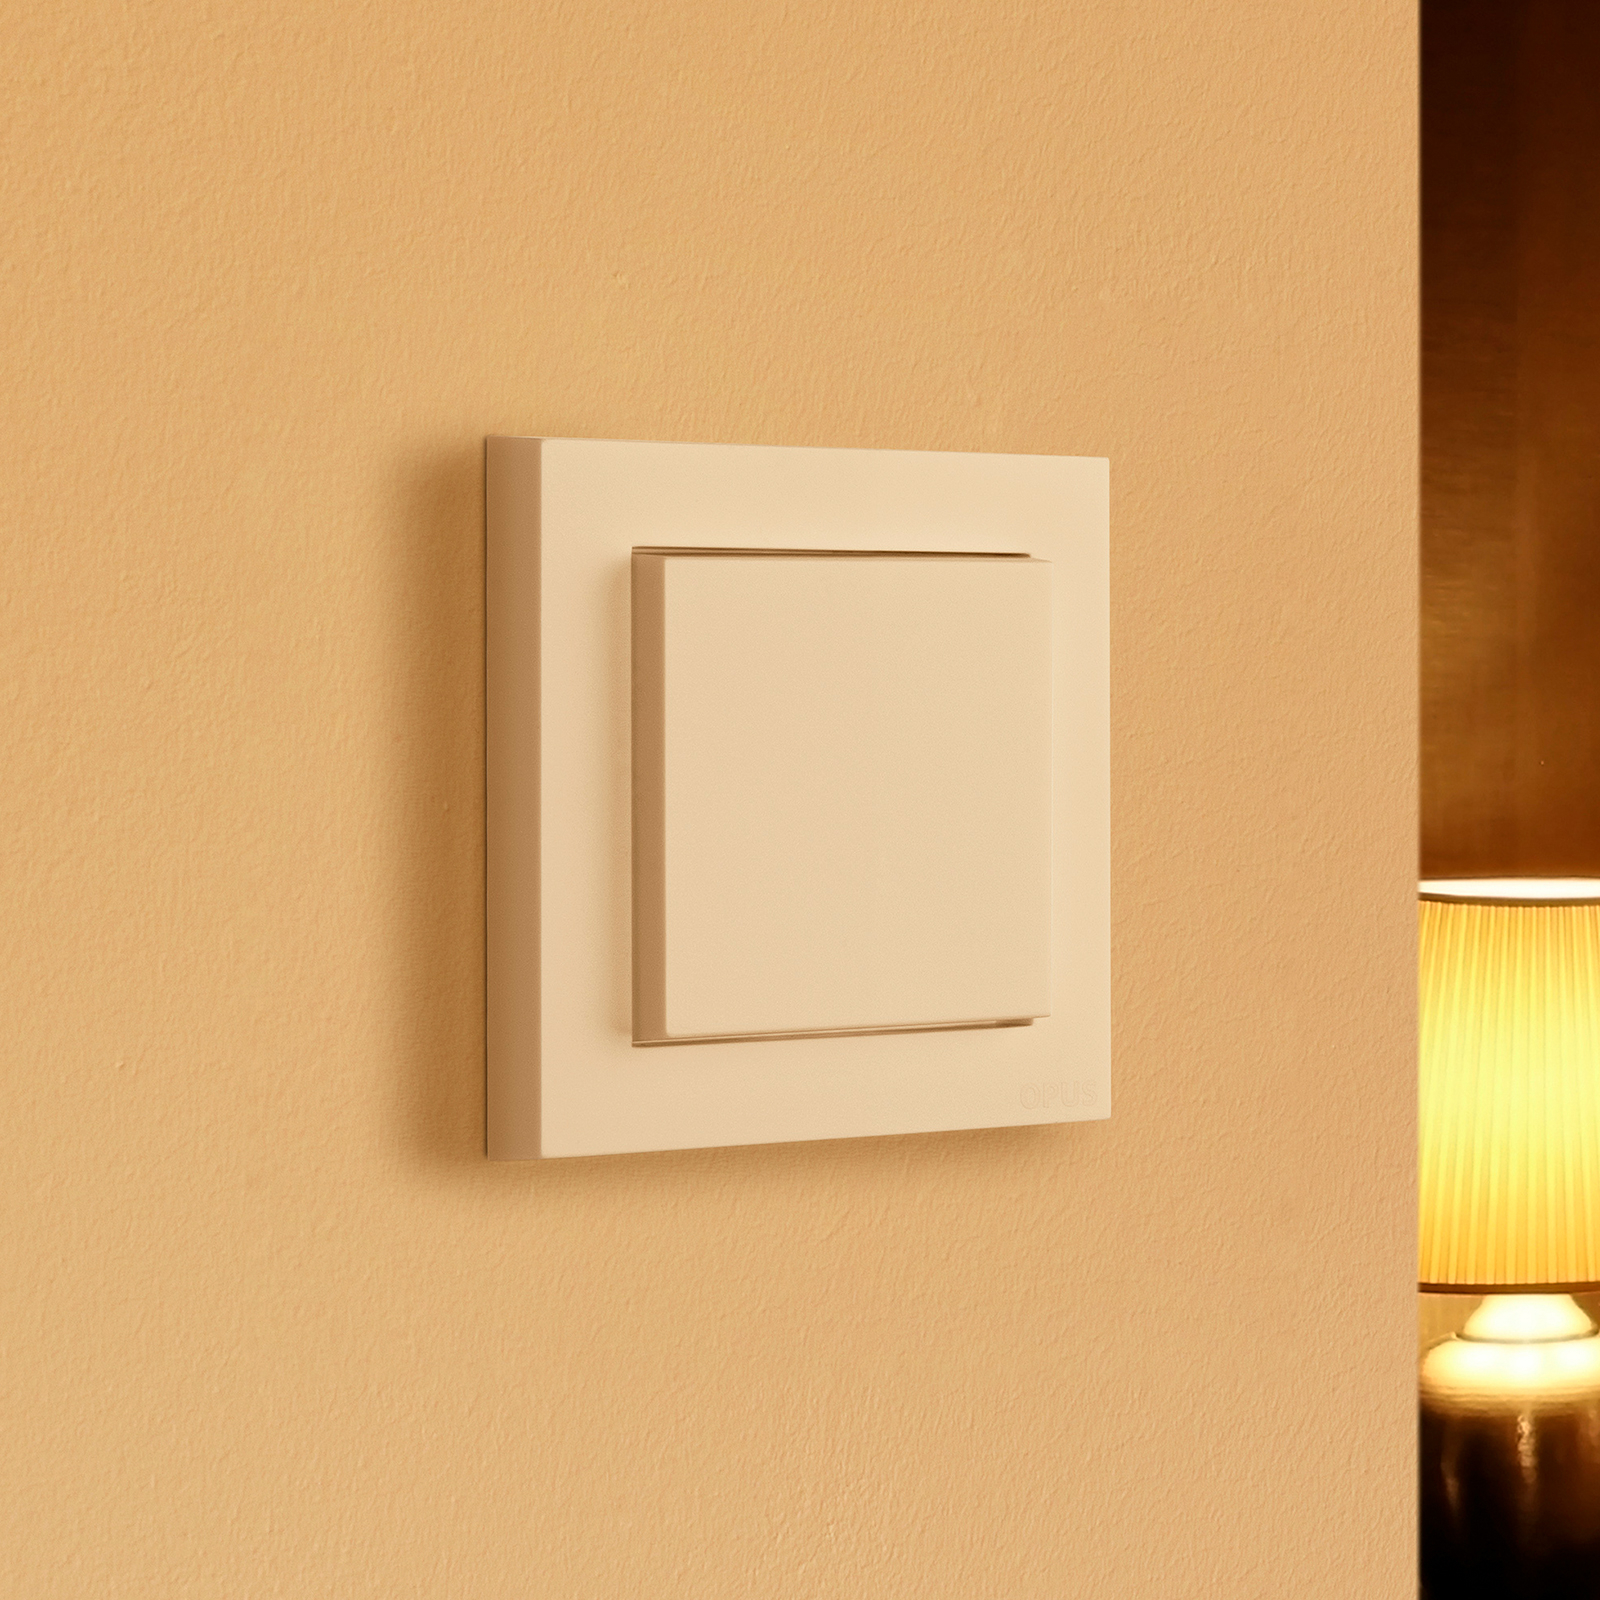 Eve Light Switch Smart Home interruptor de pared